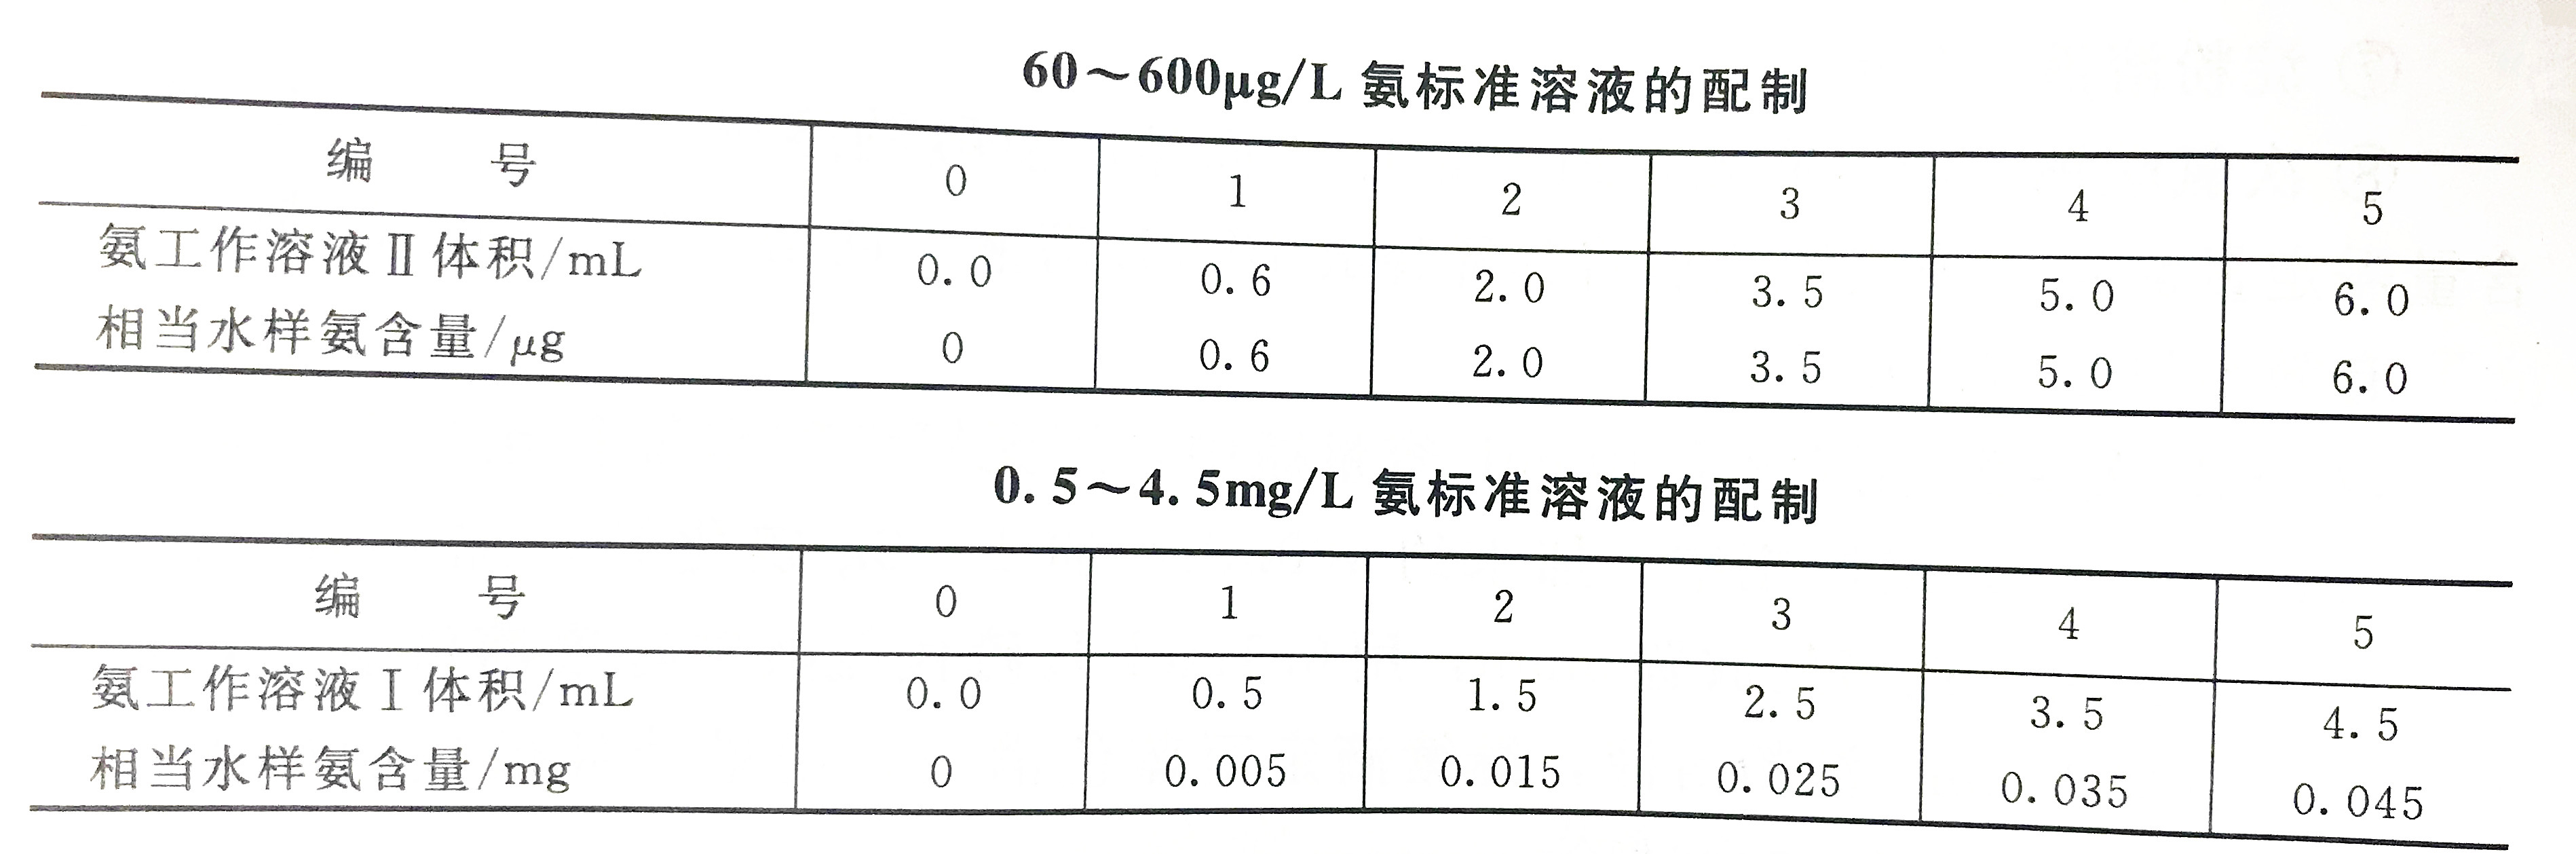 Ammonia standard solution configuration table